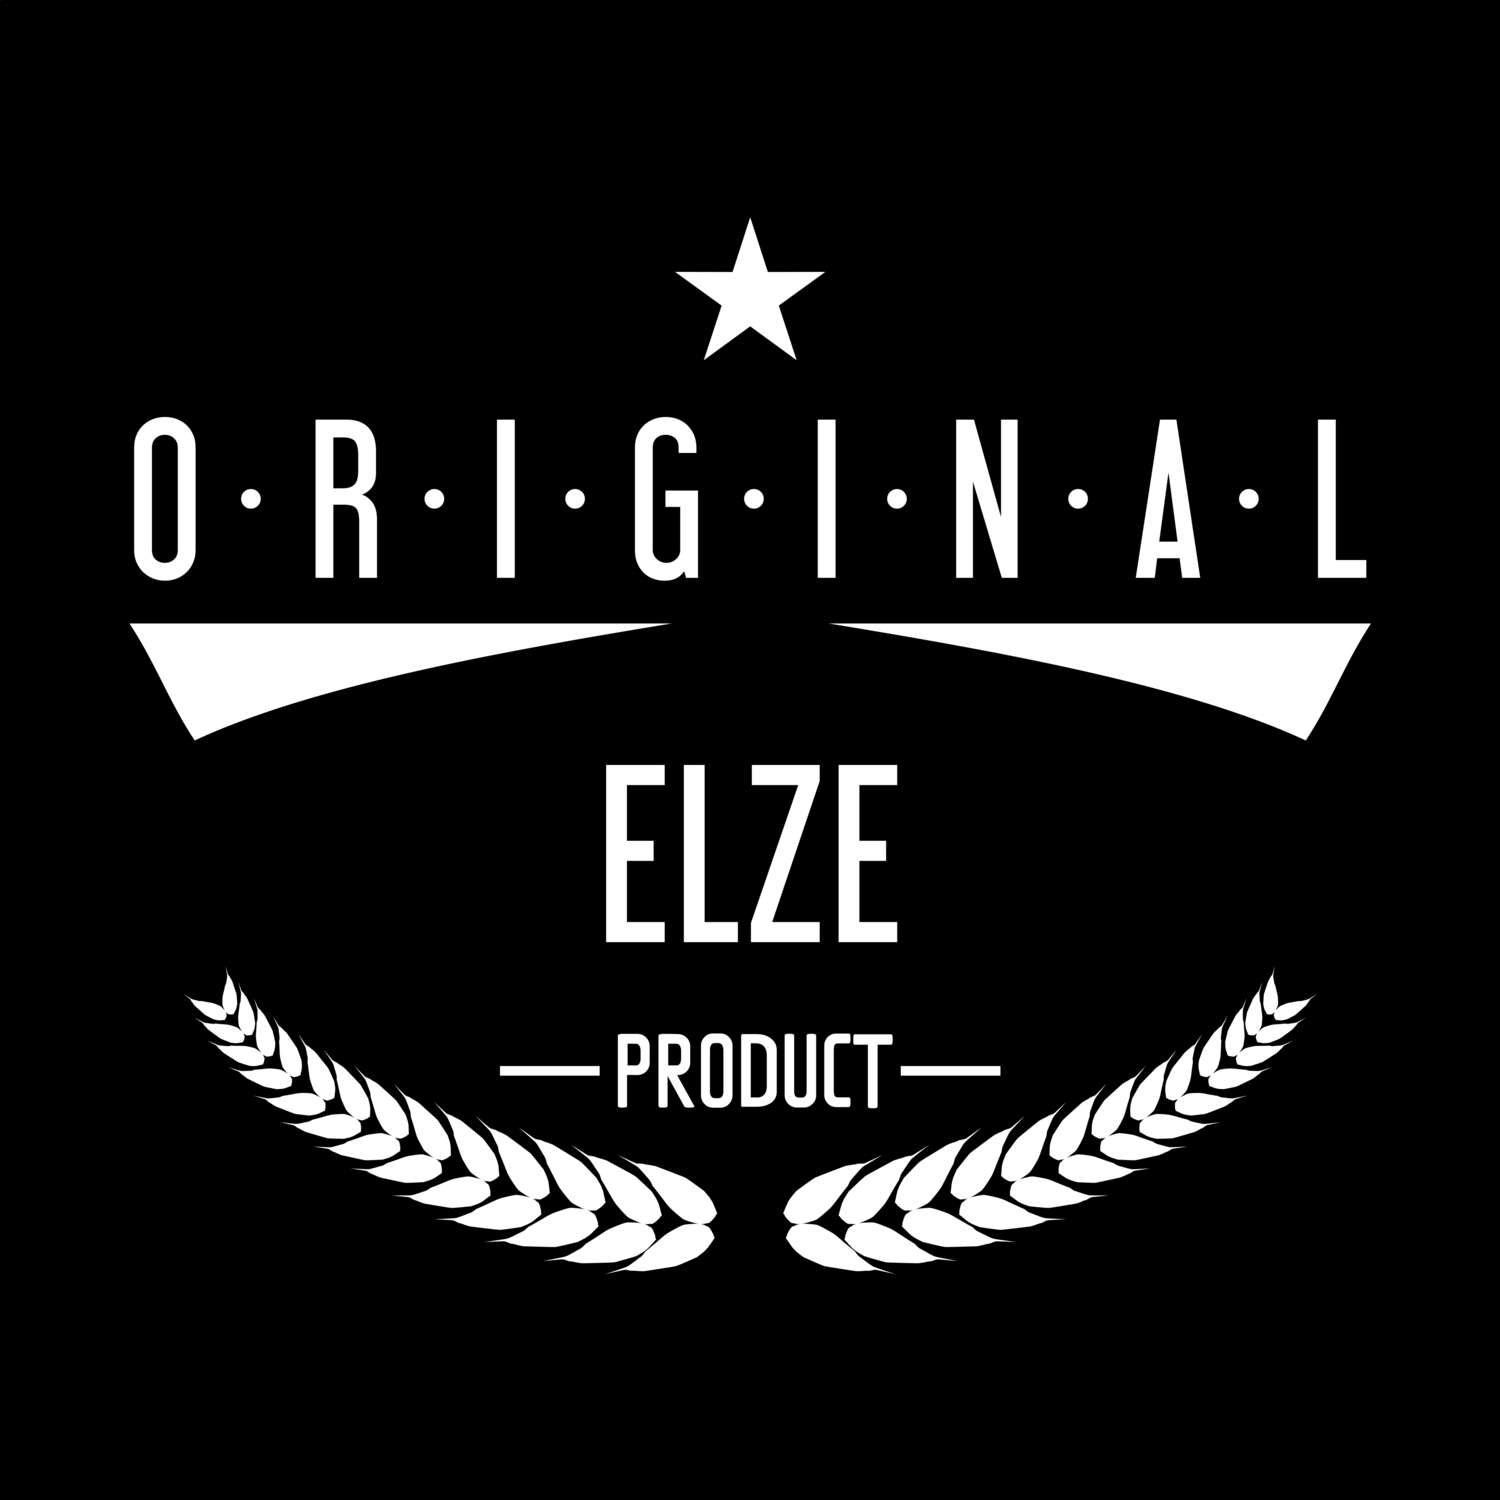 Elze T-Shirt »Original Product«